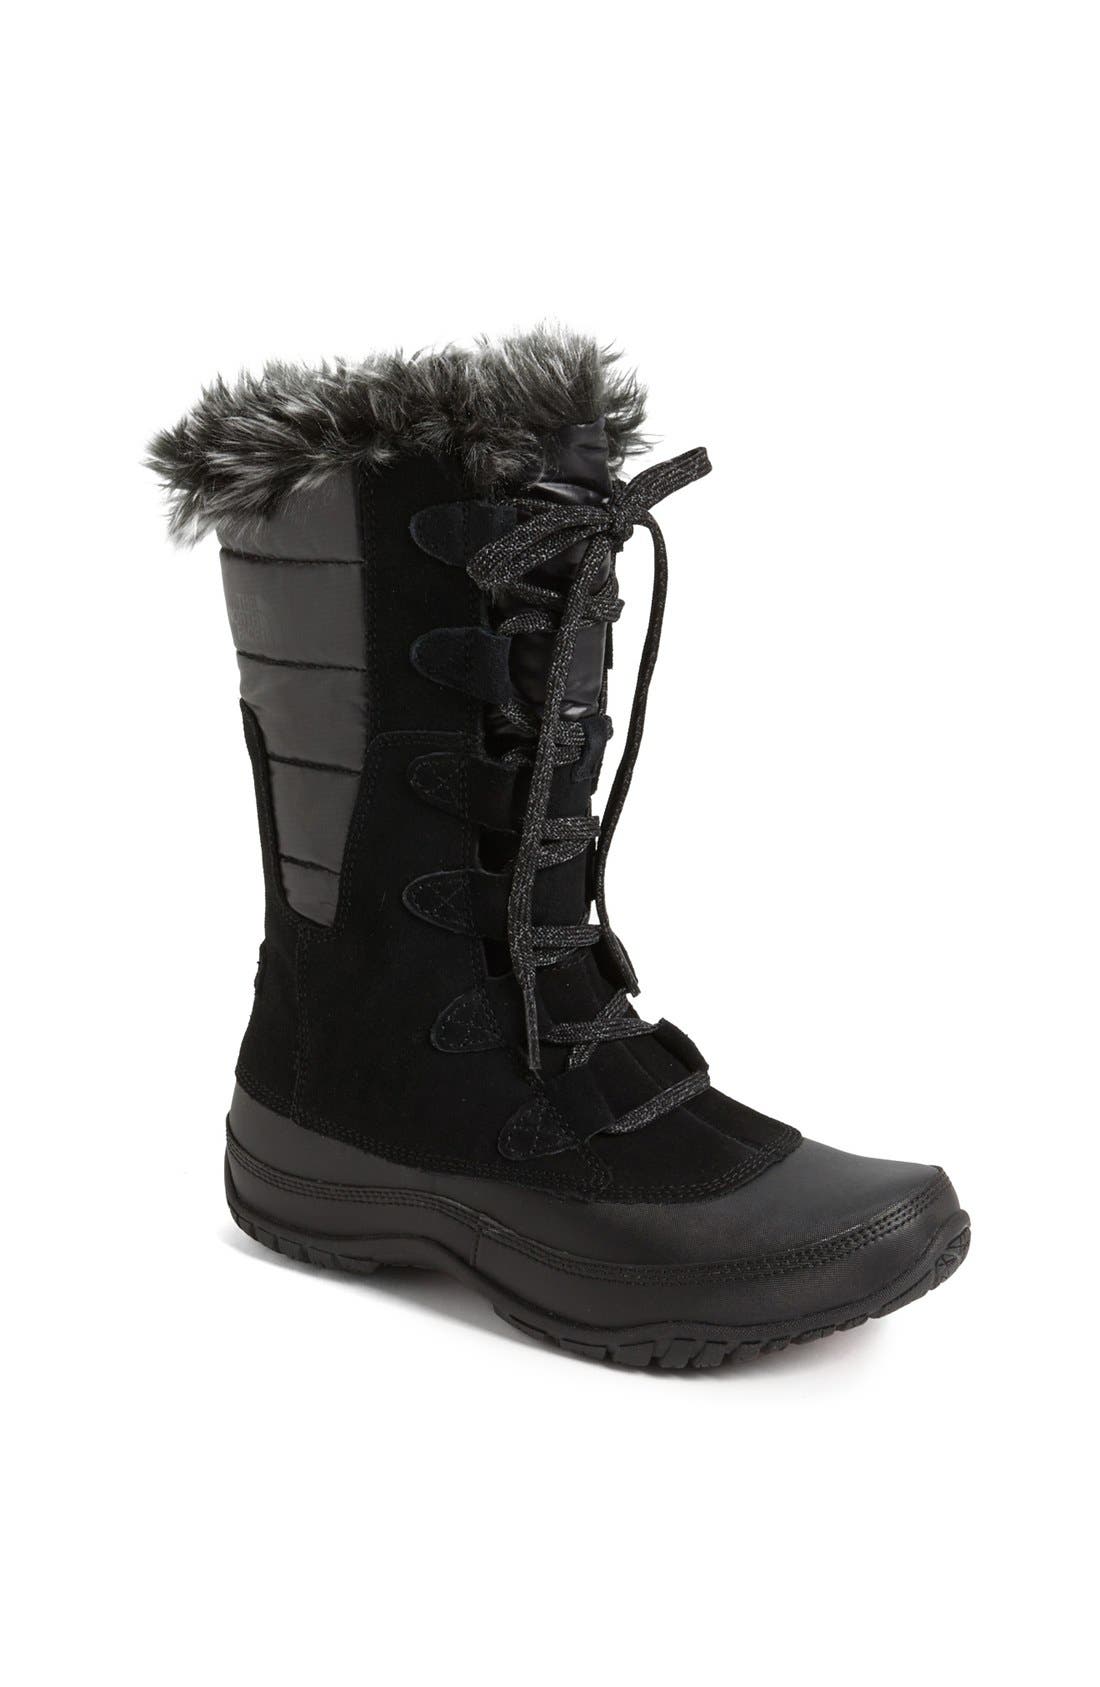 north face primaloft winter boots 